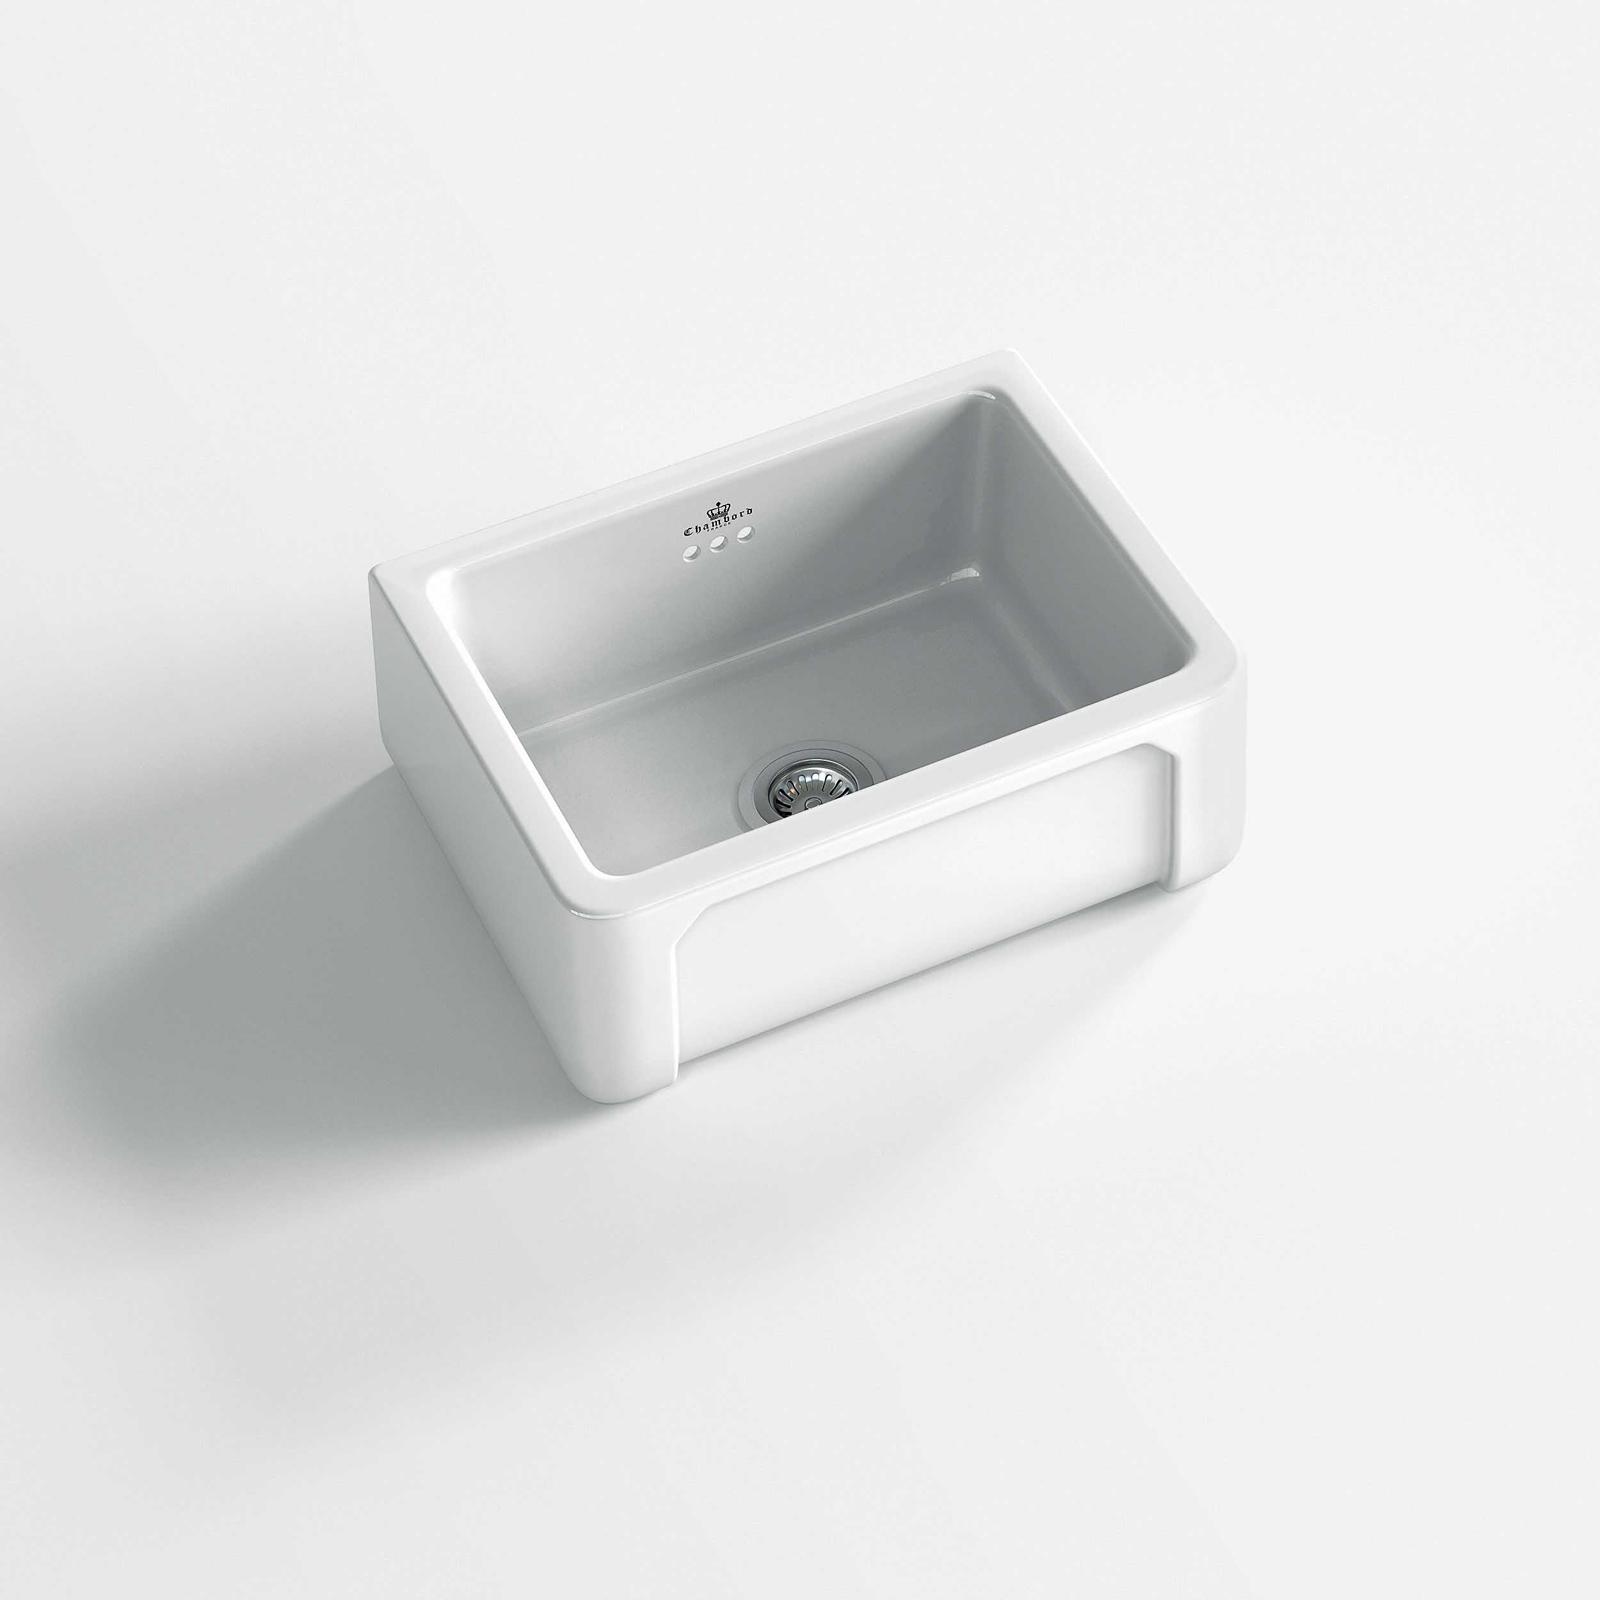 High-quality sink Henri I - single bowl, ceramic